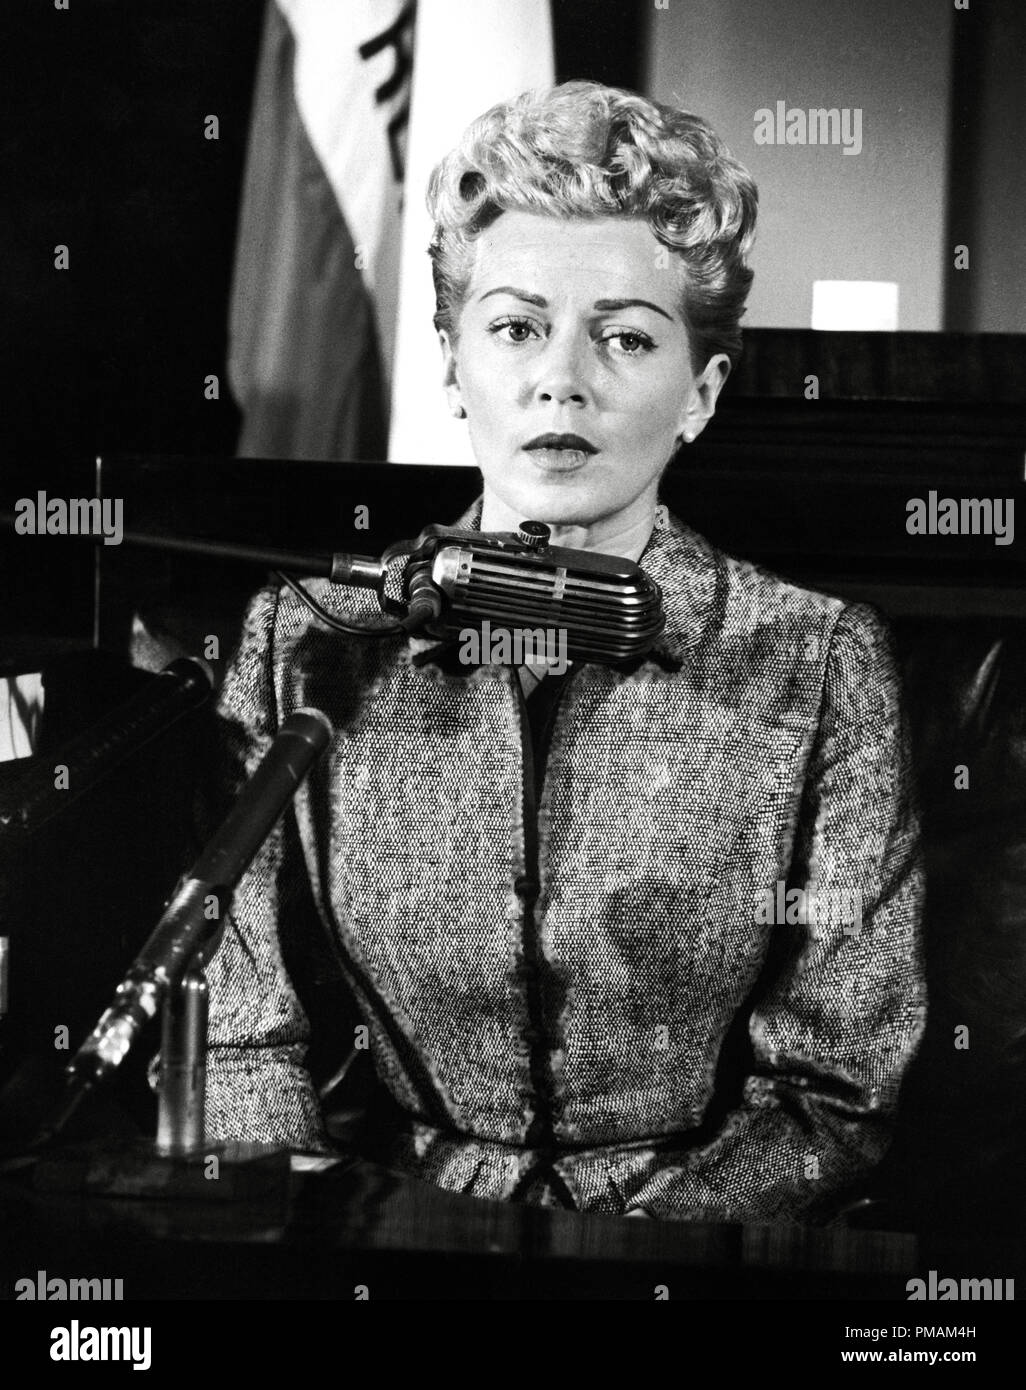 Lana Turner am Johnny Stompanato Mordversuch, 1958 Datei Referenz # 33300 924 THA Stockfoto